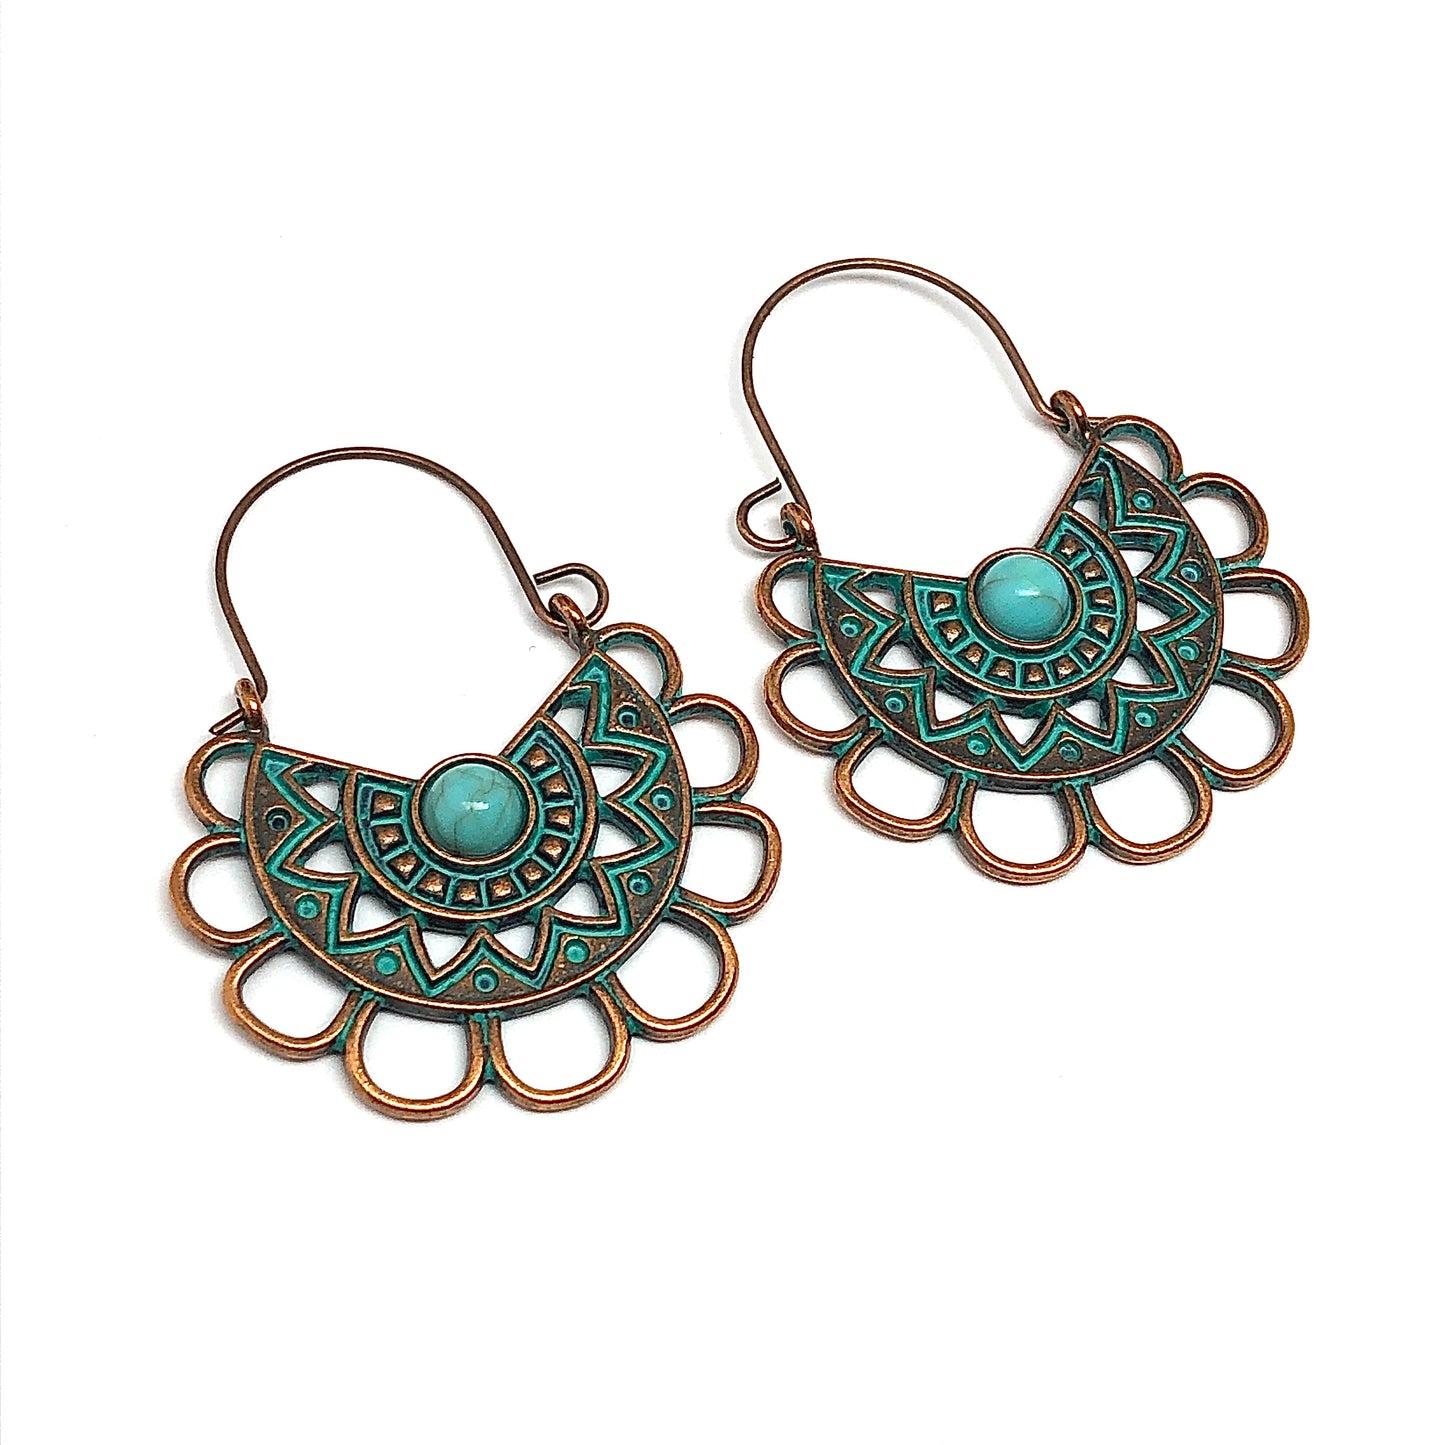 Hoop Earrings Scalloped Side Profile in Rustic Copper Turquoise Verdigris | Southwestern Jewelry